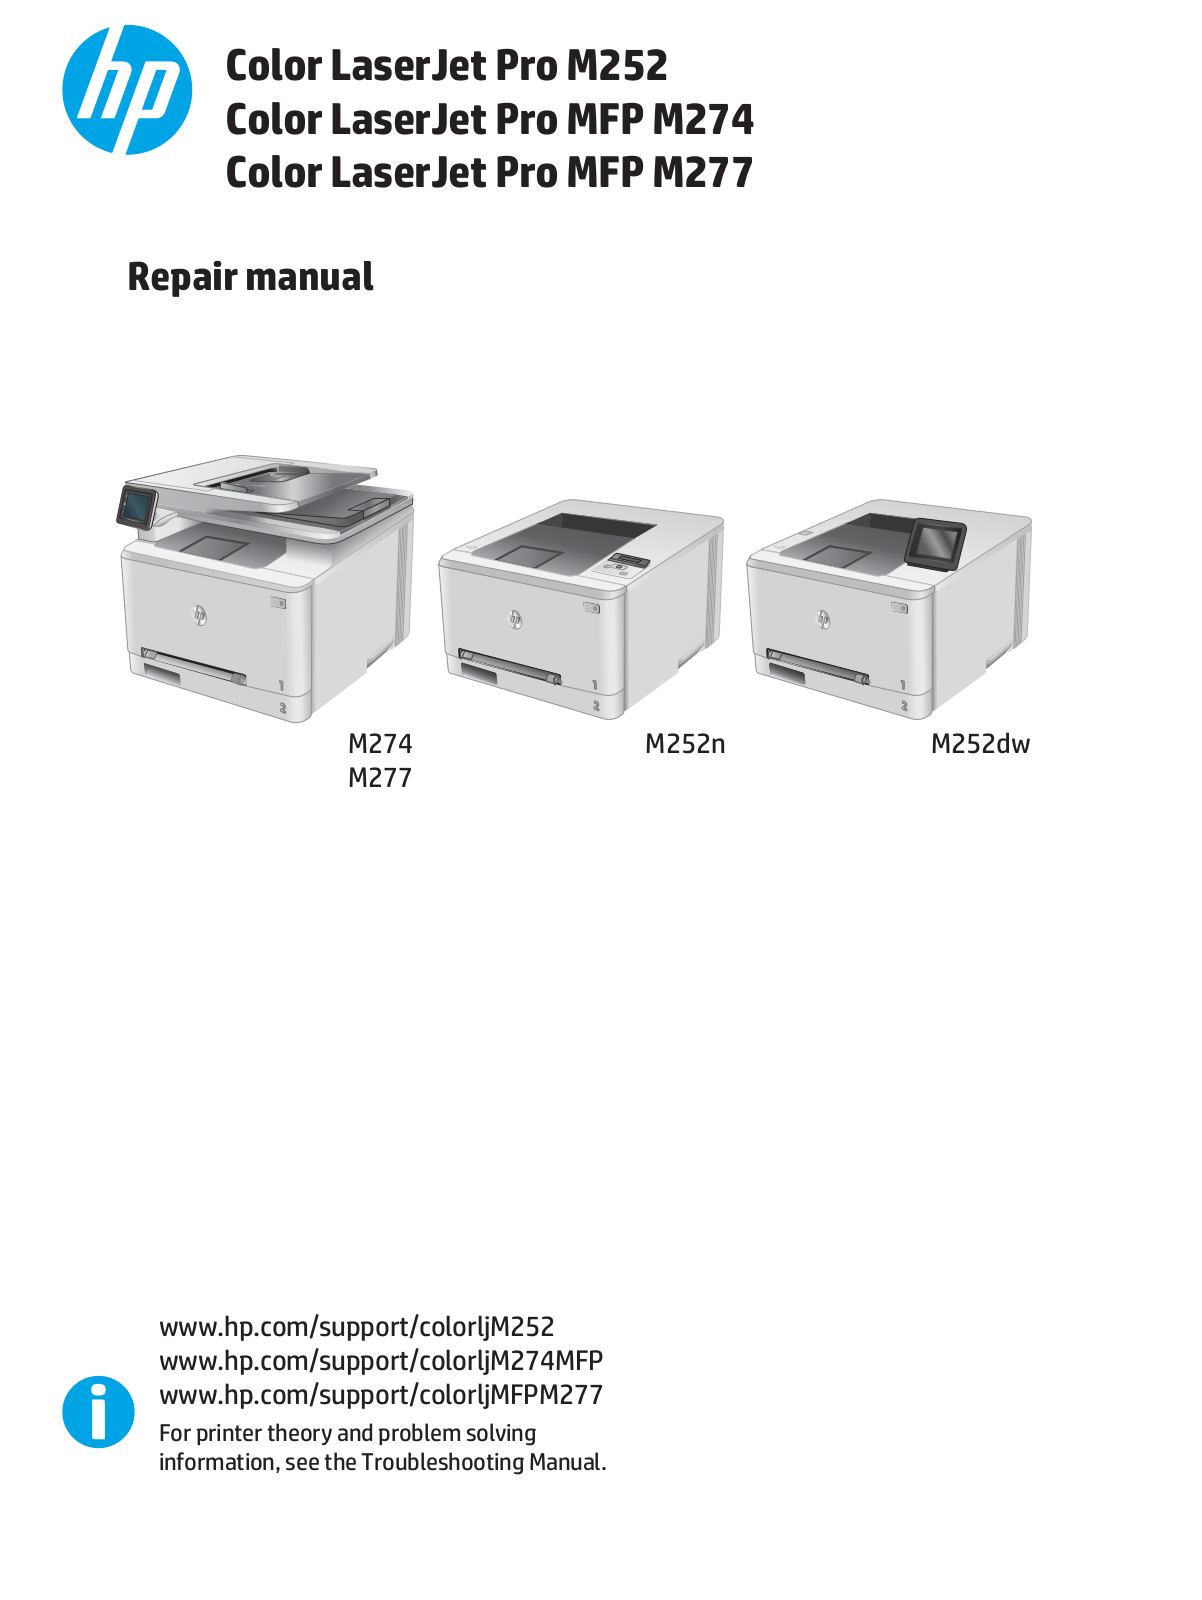 HP Color LaserJet Pro M252, Color LaserJet Pro M274, Color LaserJet Pro M277 Troubleshooting manual and Repair manual